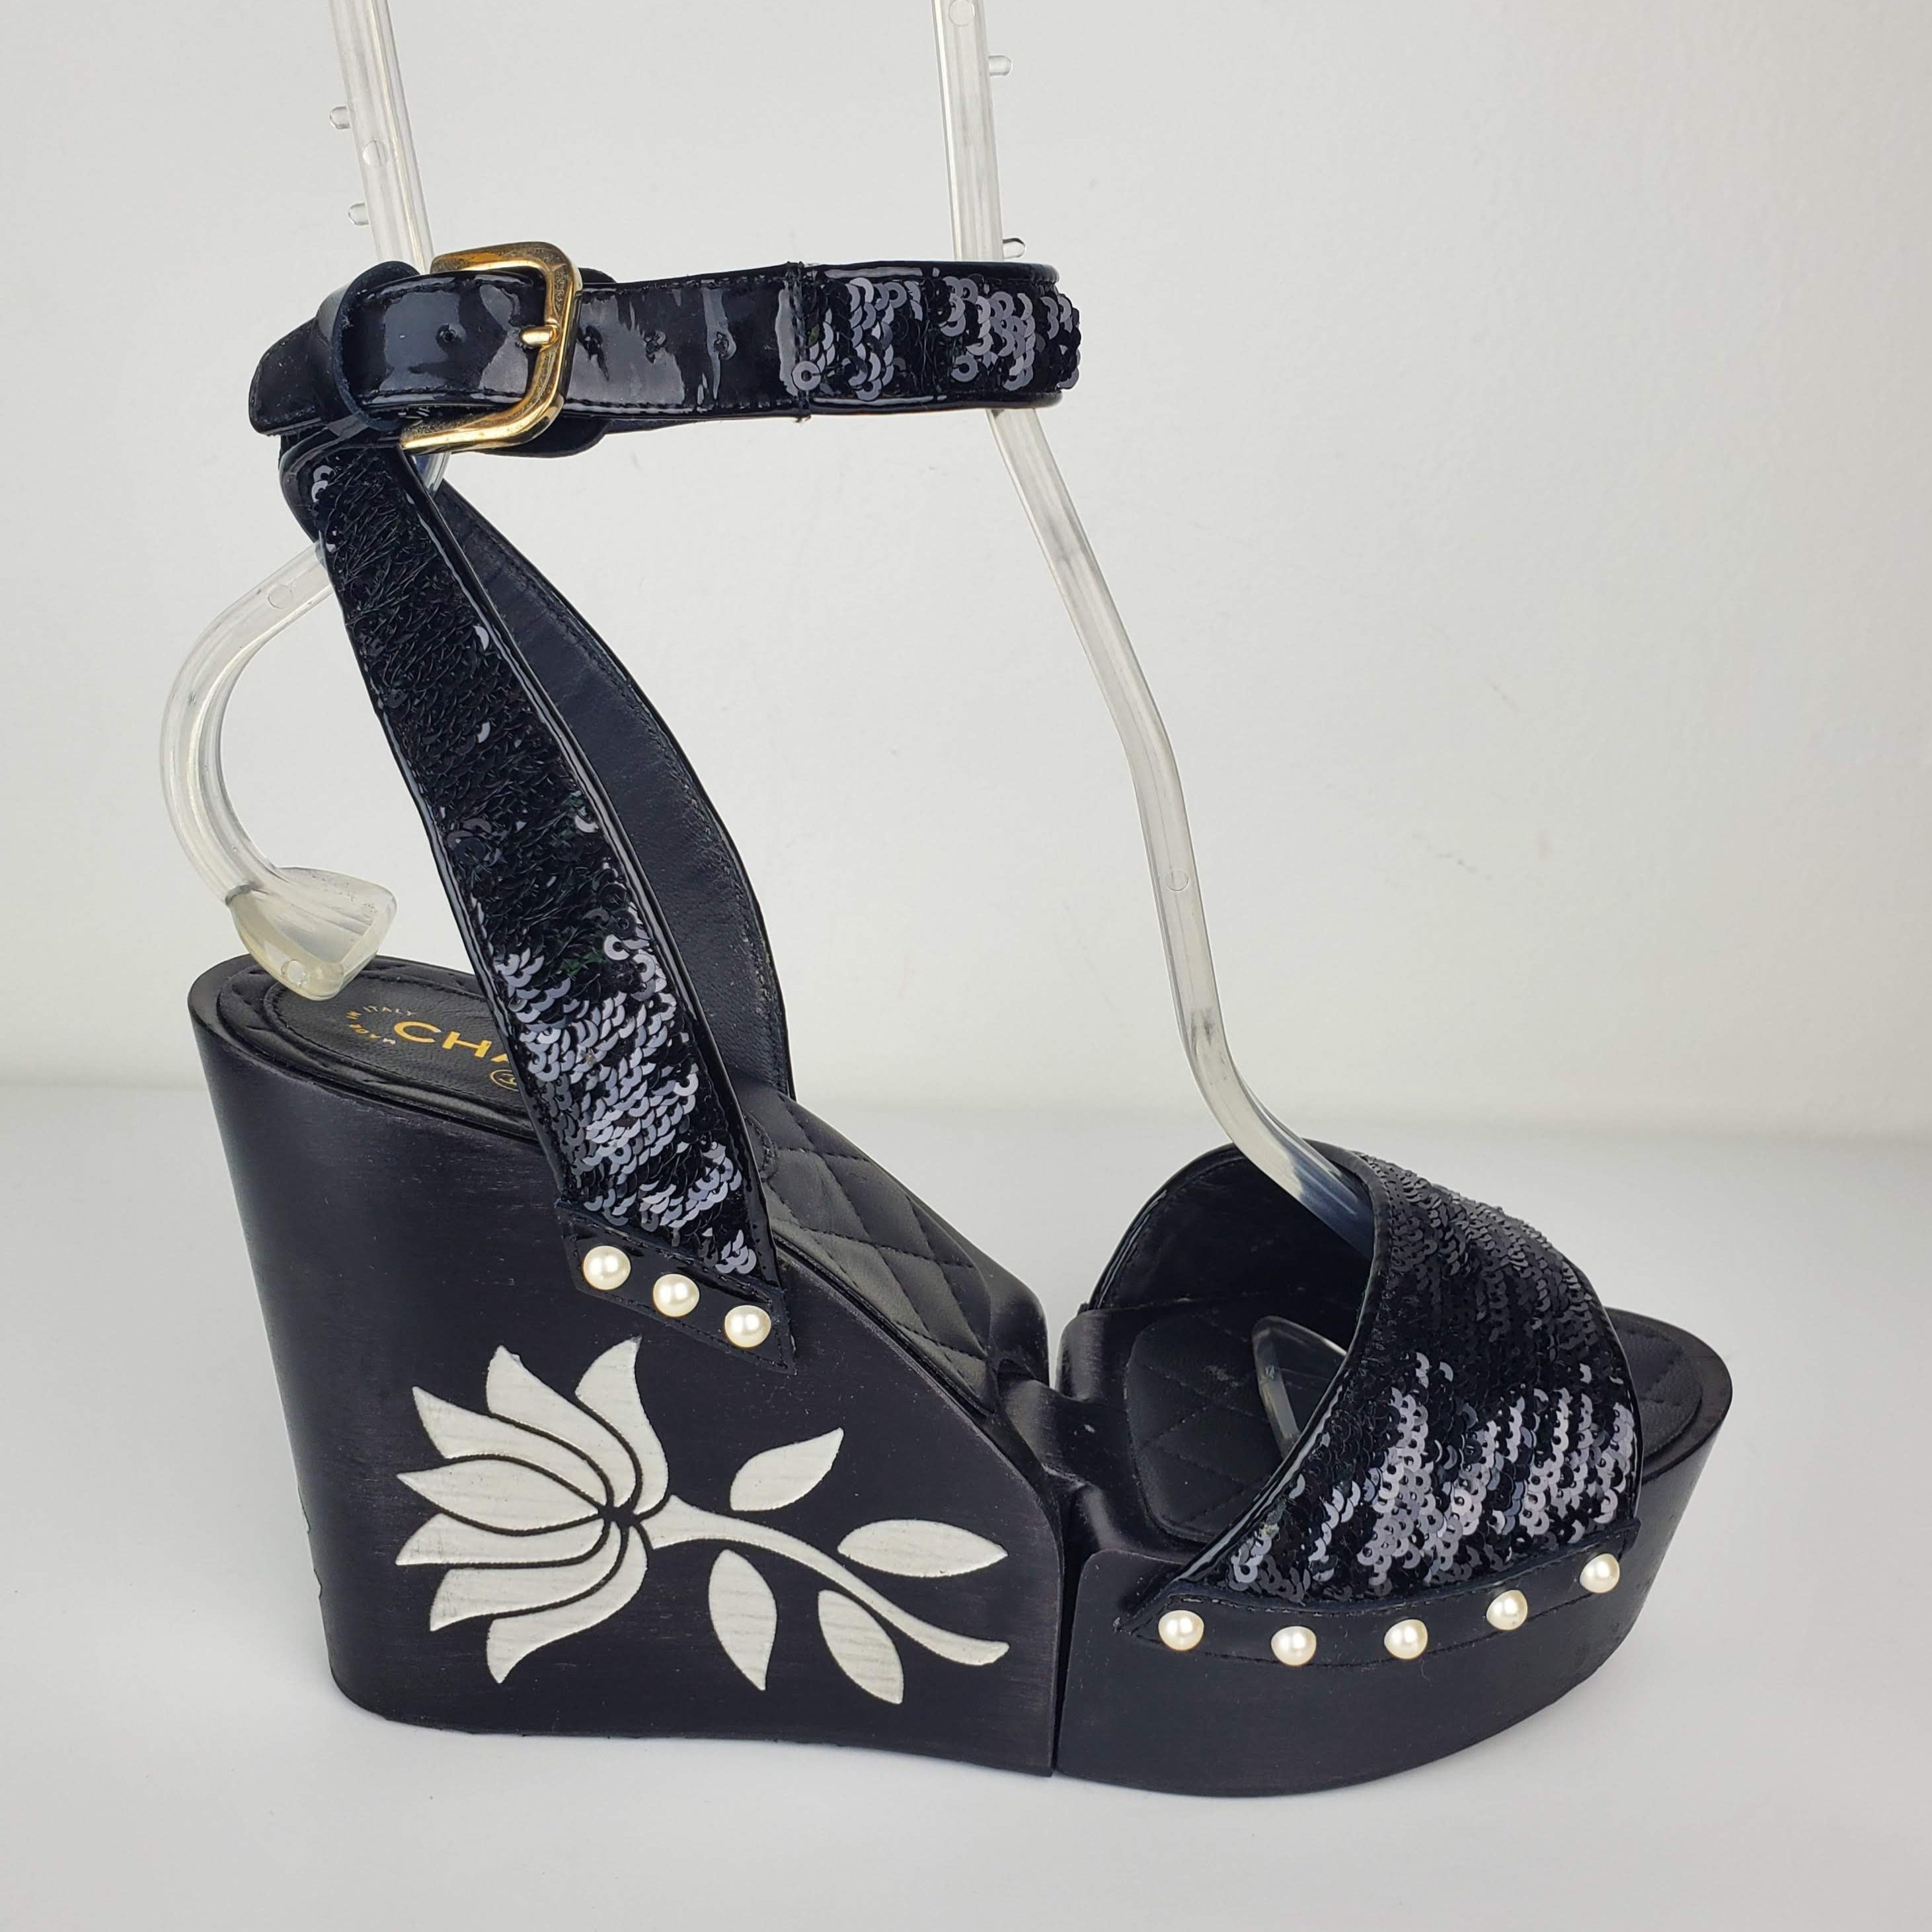 Prada - Black Patent Leather T-Strap Wedge Sandals w/ Ankle Strap